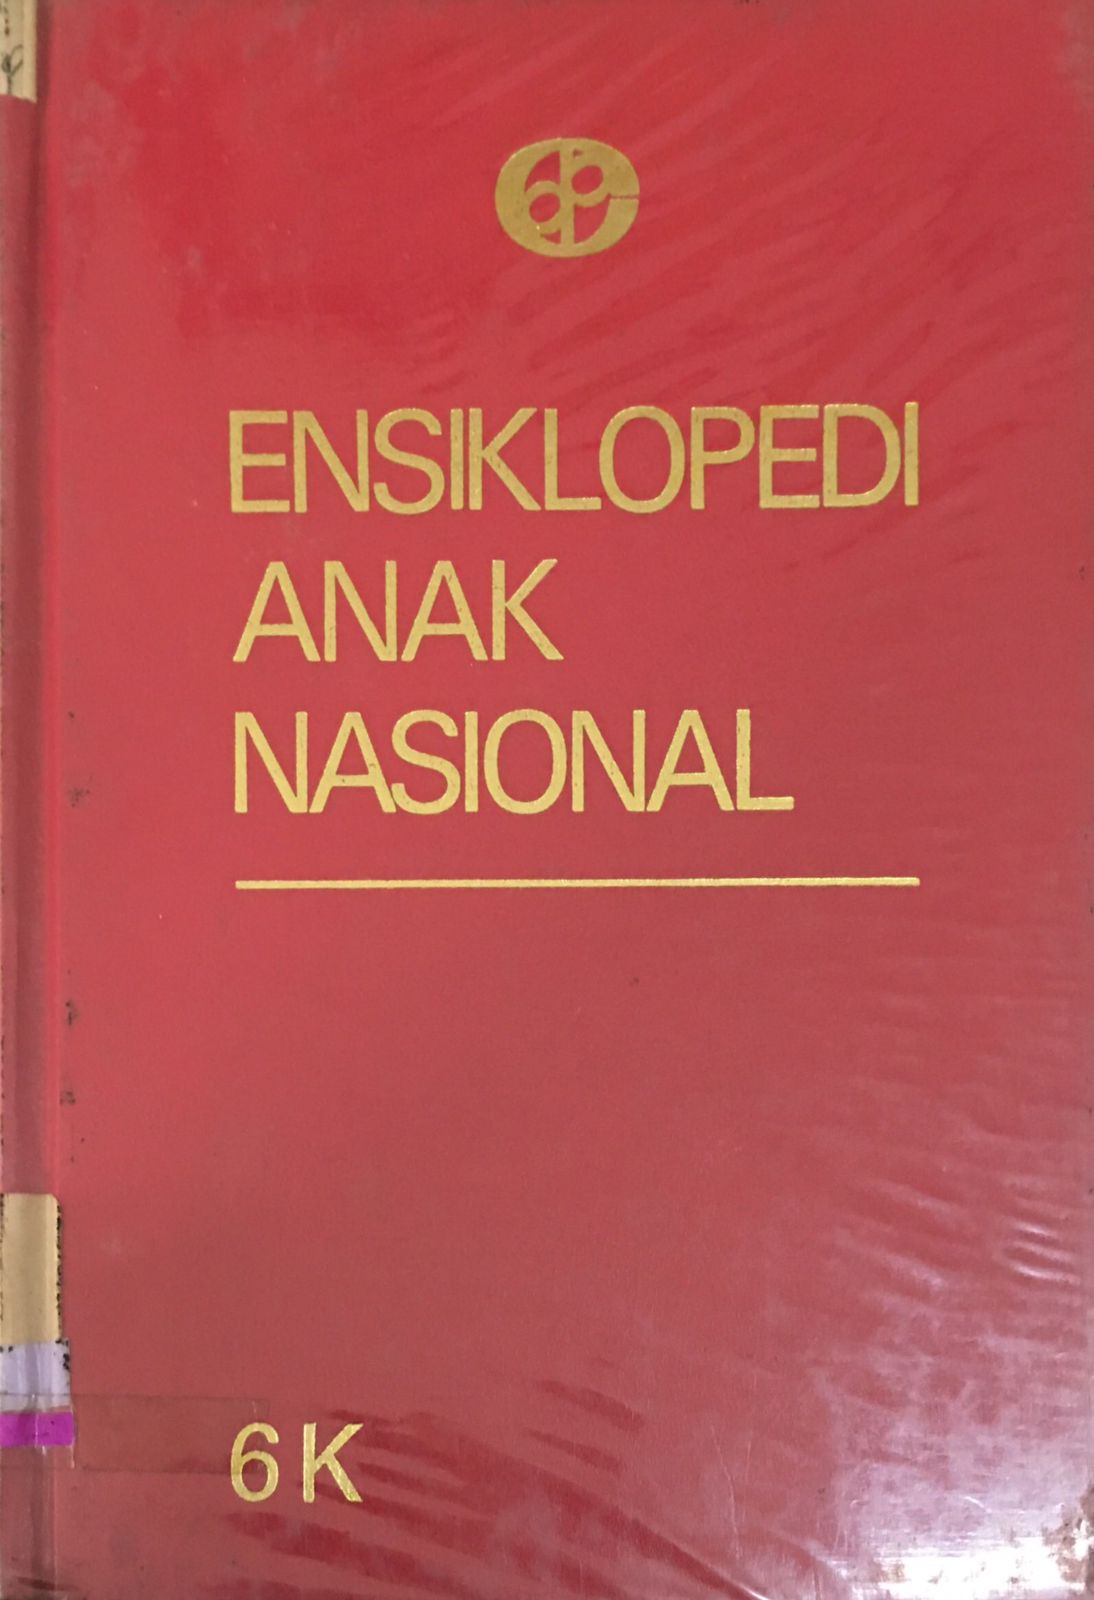 Ensiklopedi anak nasional 6 K